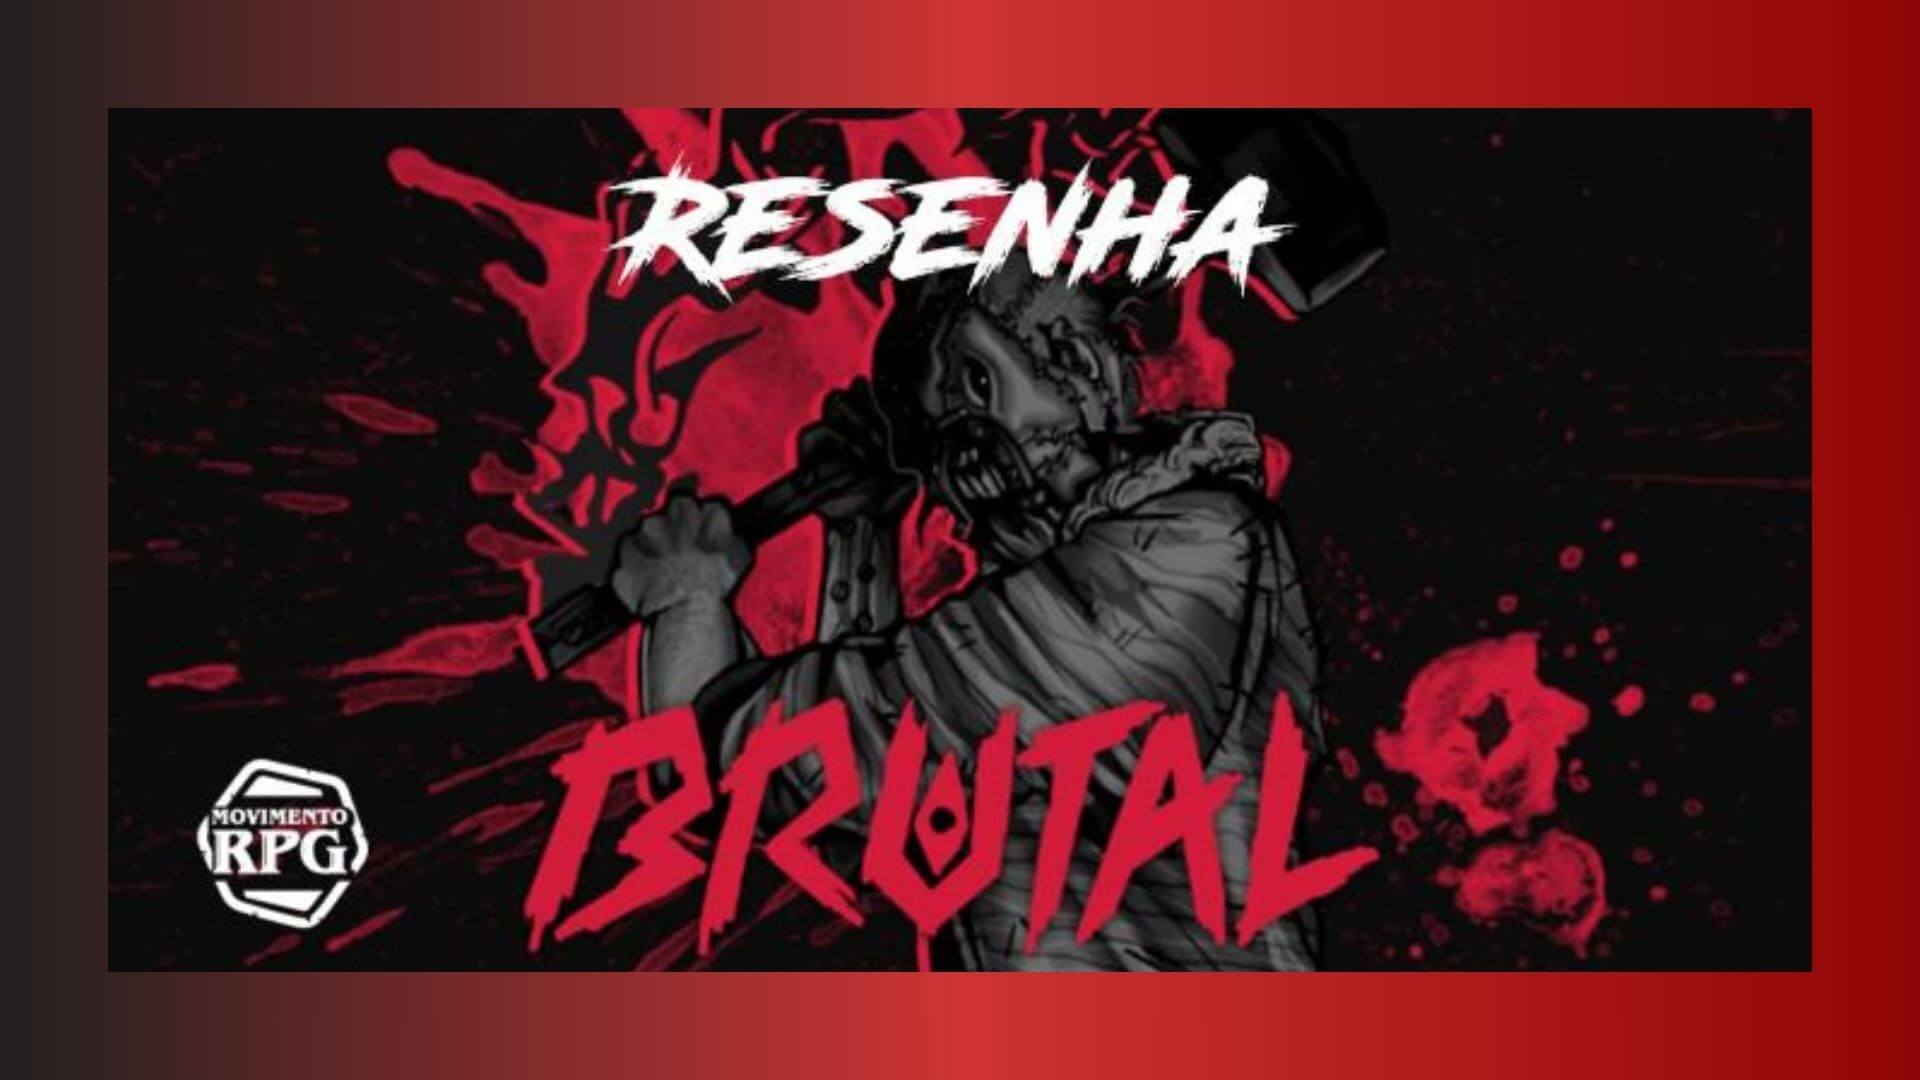 Brutal – Resenha